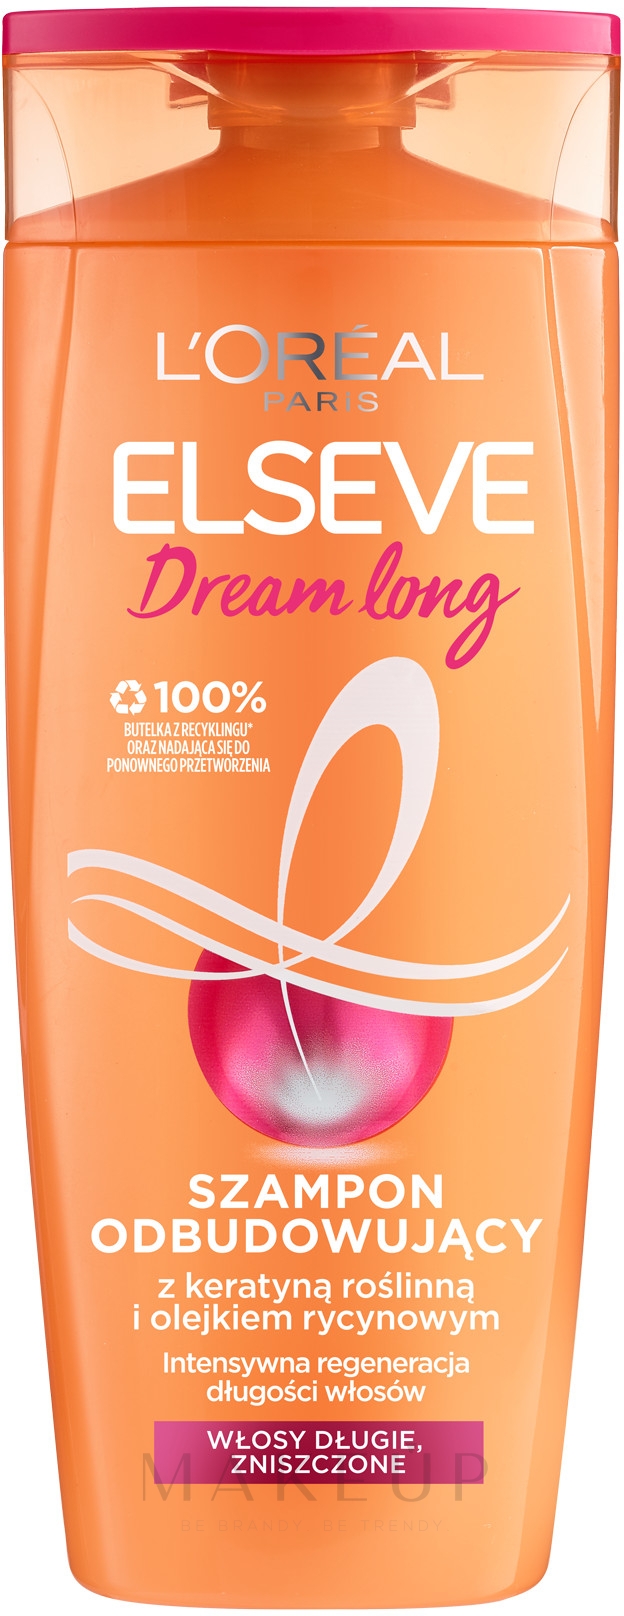 loreal szampon dream long